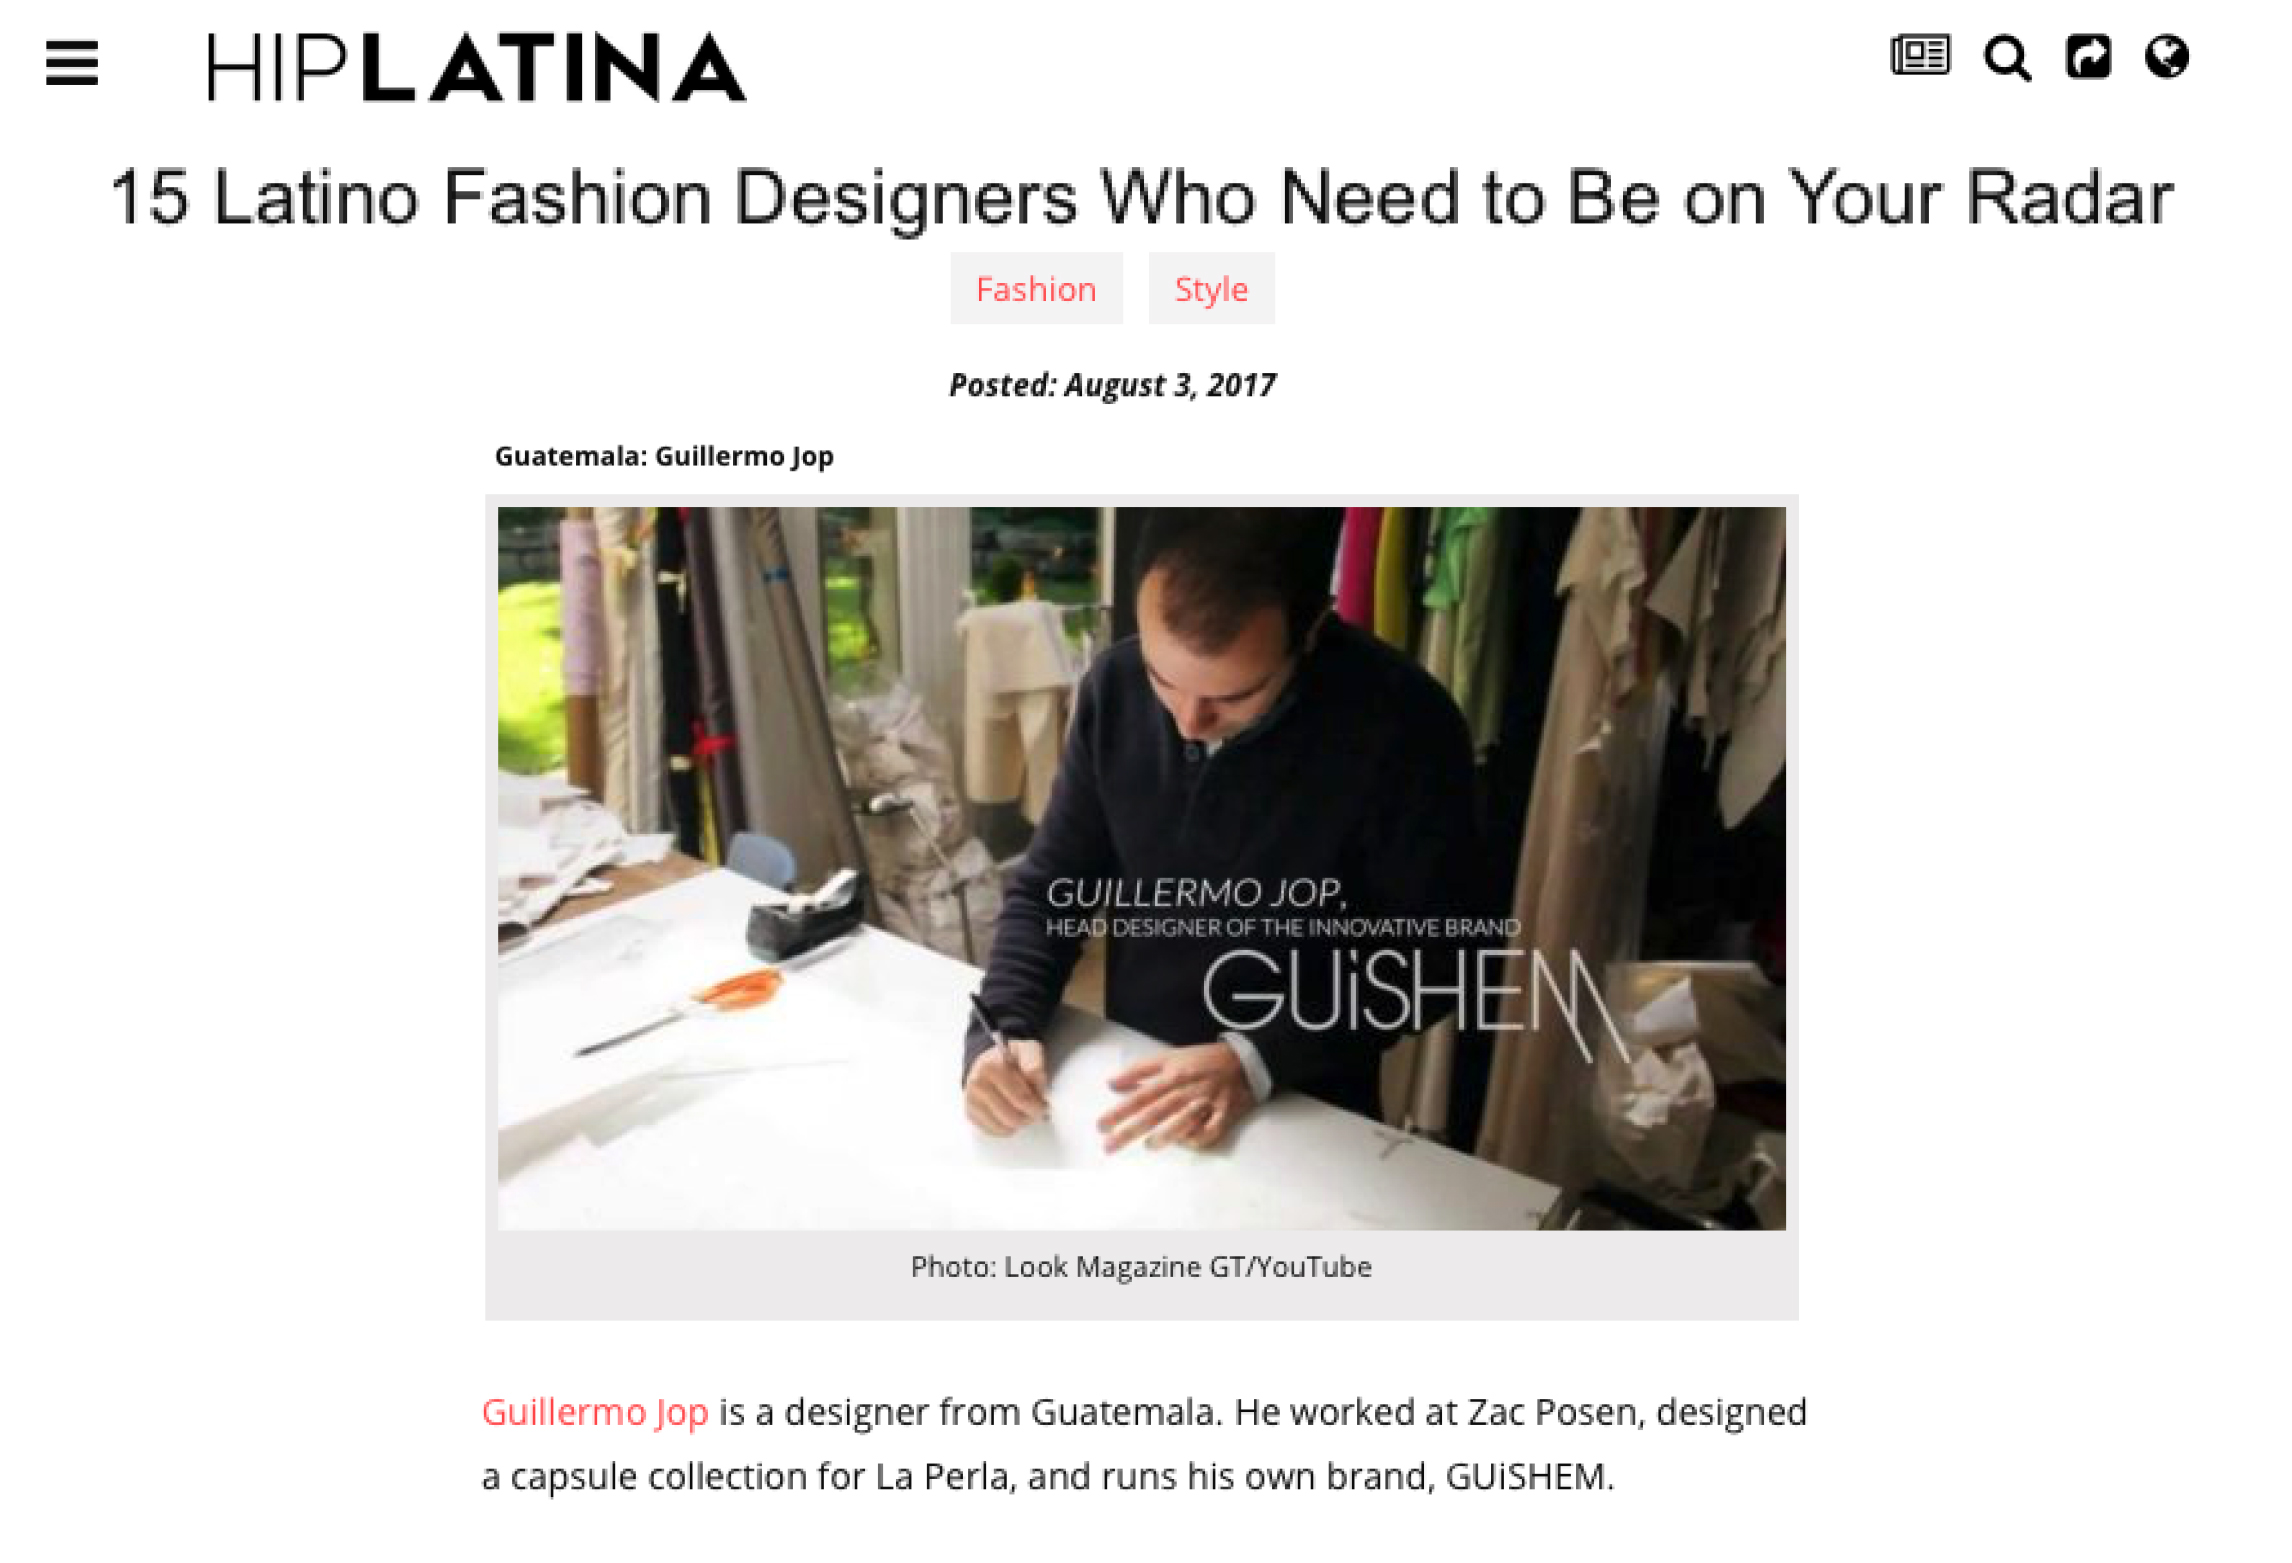 15 Latino Fashion Designers Who Need to Be on Your Radar